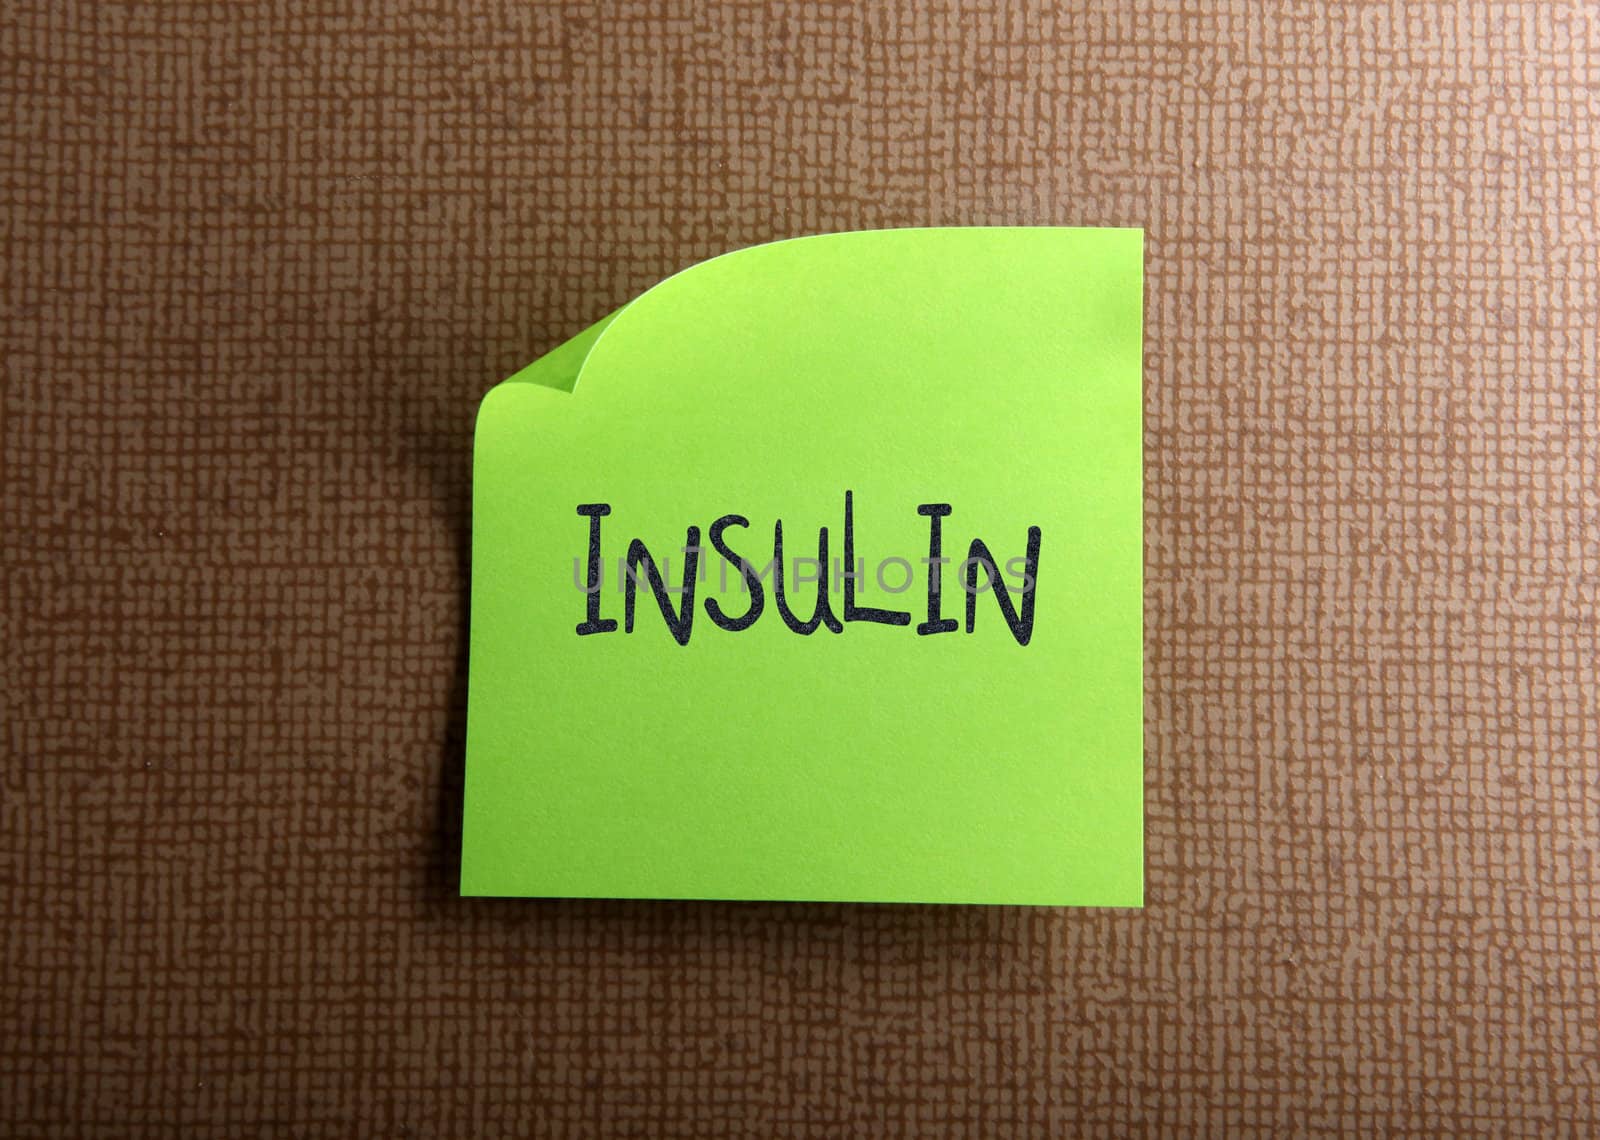 Insulin by nenov